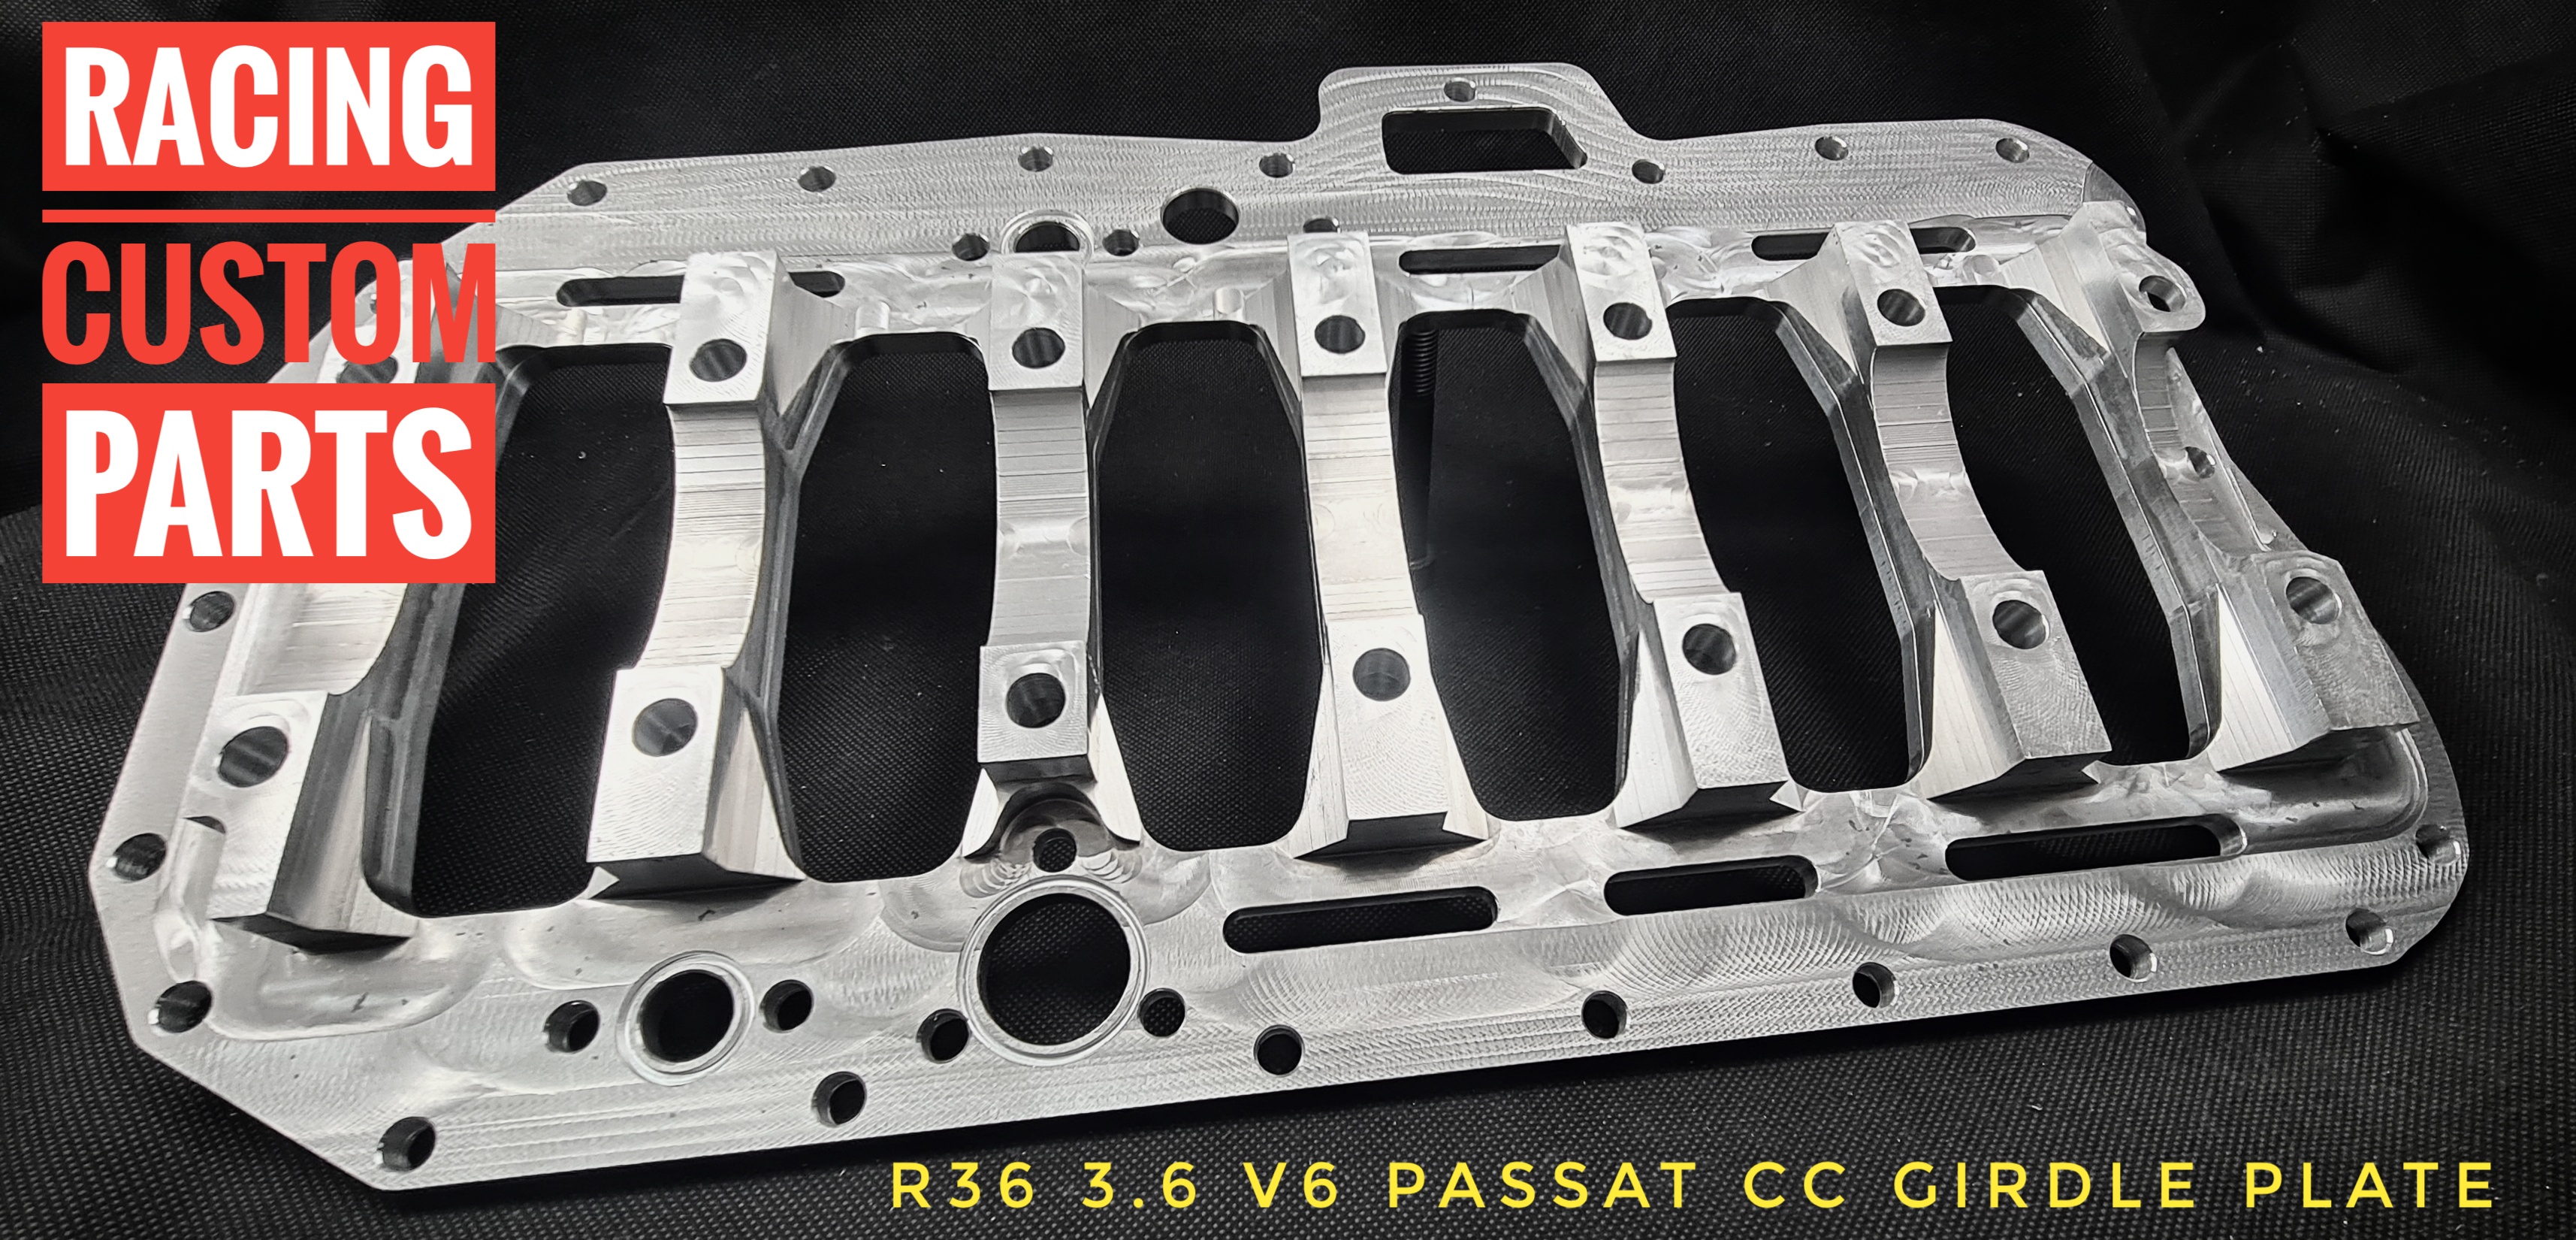 r36 3,6v6 passat cc audi wv girdle plate racing custom parts billet cnc turbo block girdle